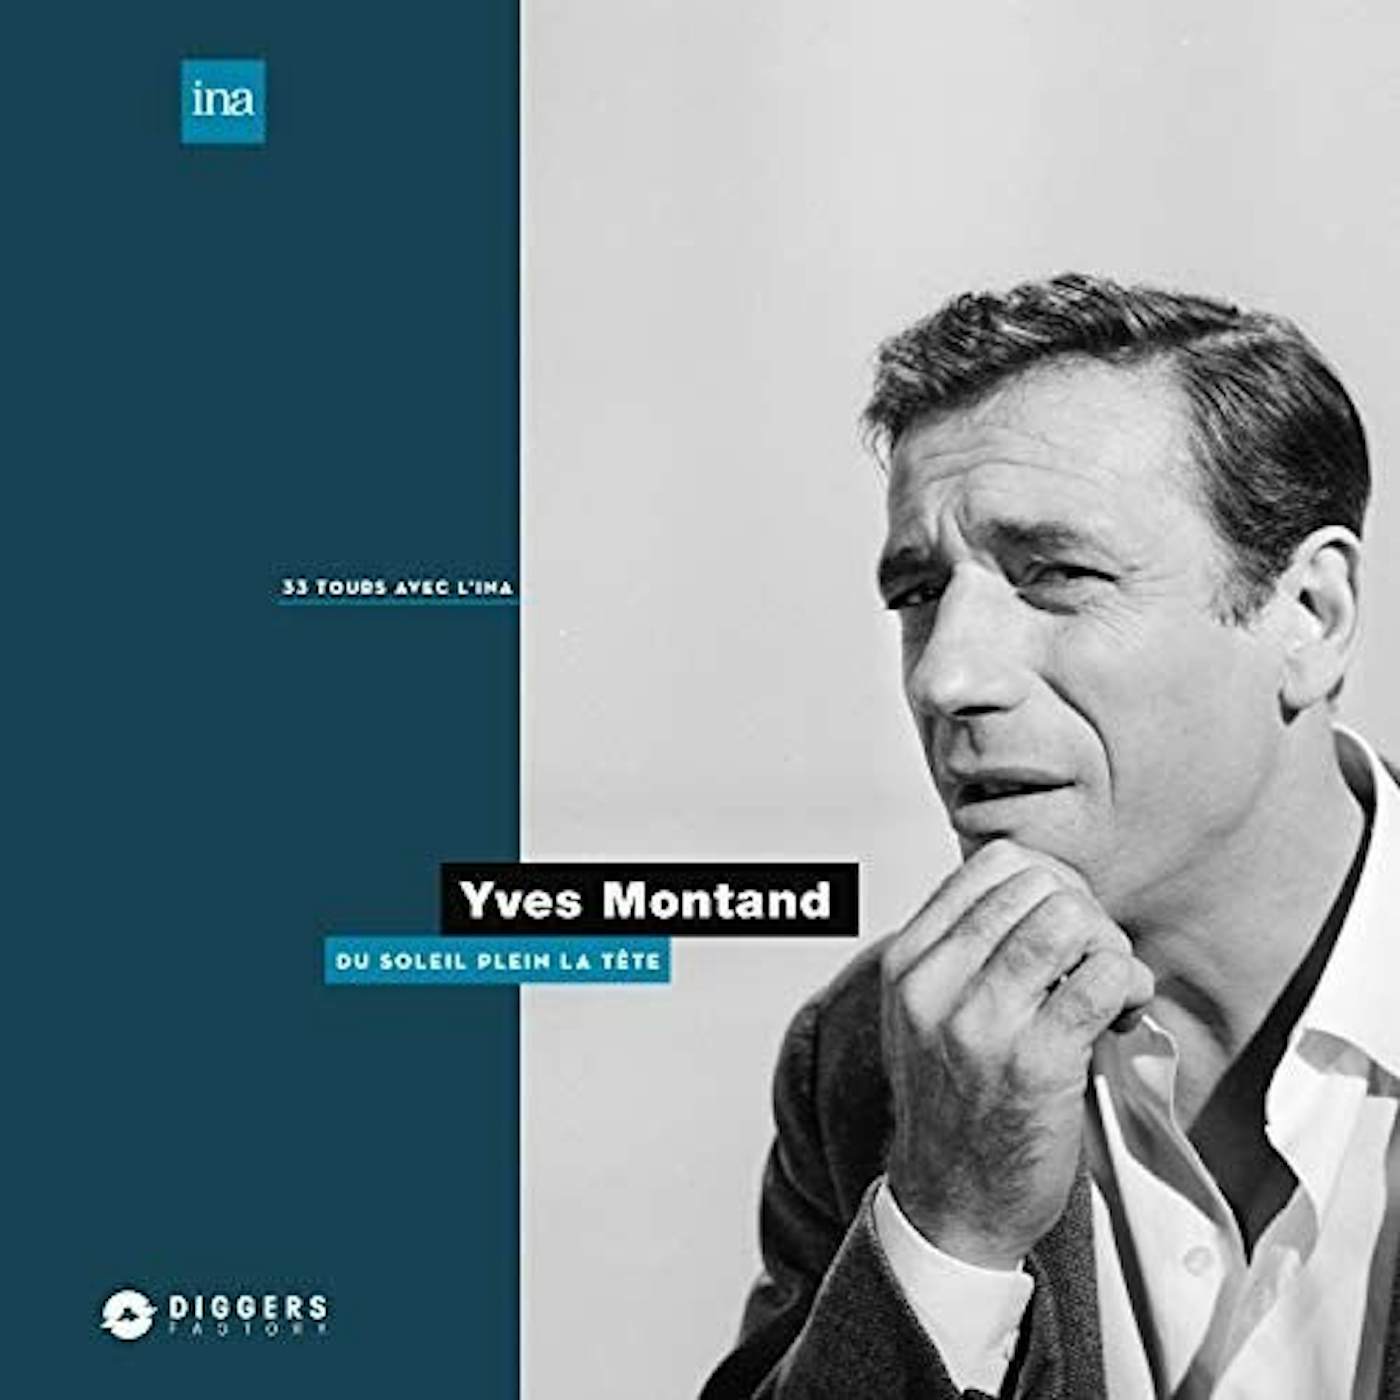 Yves Montand DU SOLEIL PLEIN LA TETE (IMPORT) Vinyl Record